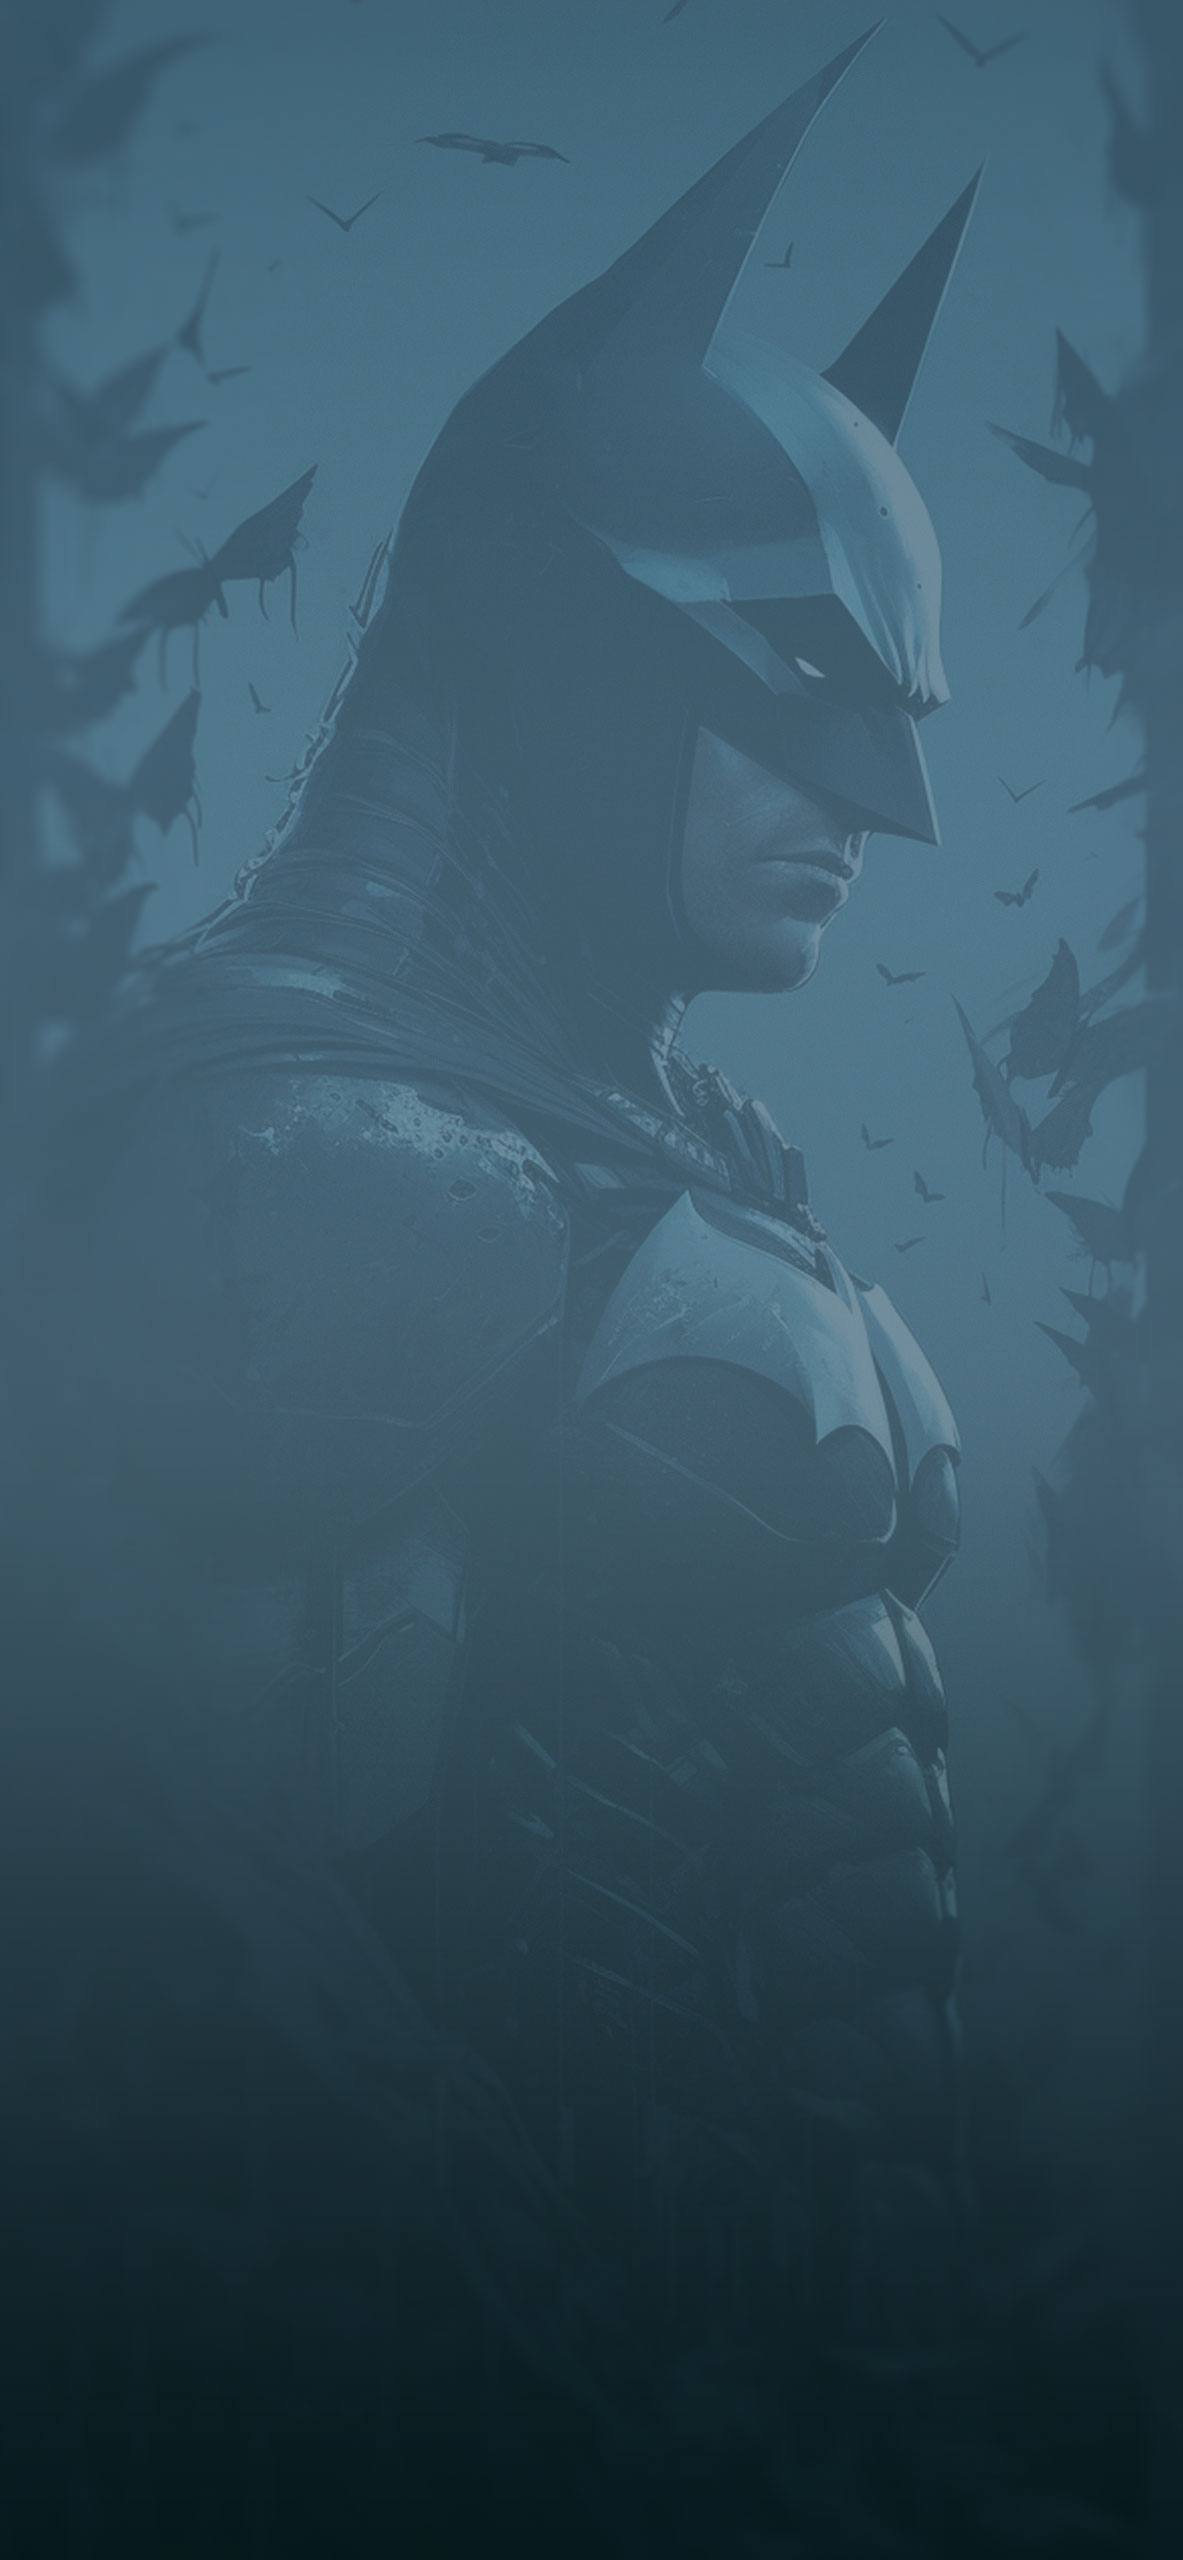 DC Batman Dark Blue Wallpaper Batman Wallpaper for iPhone